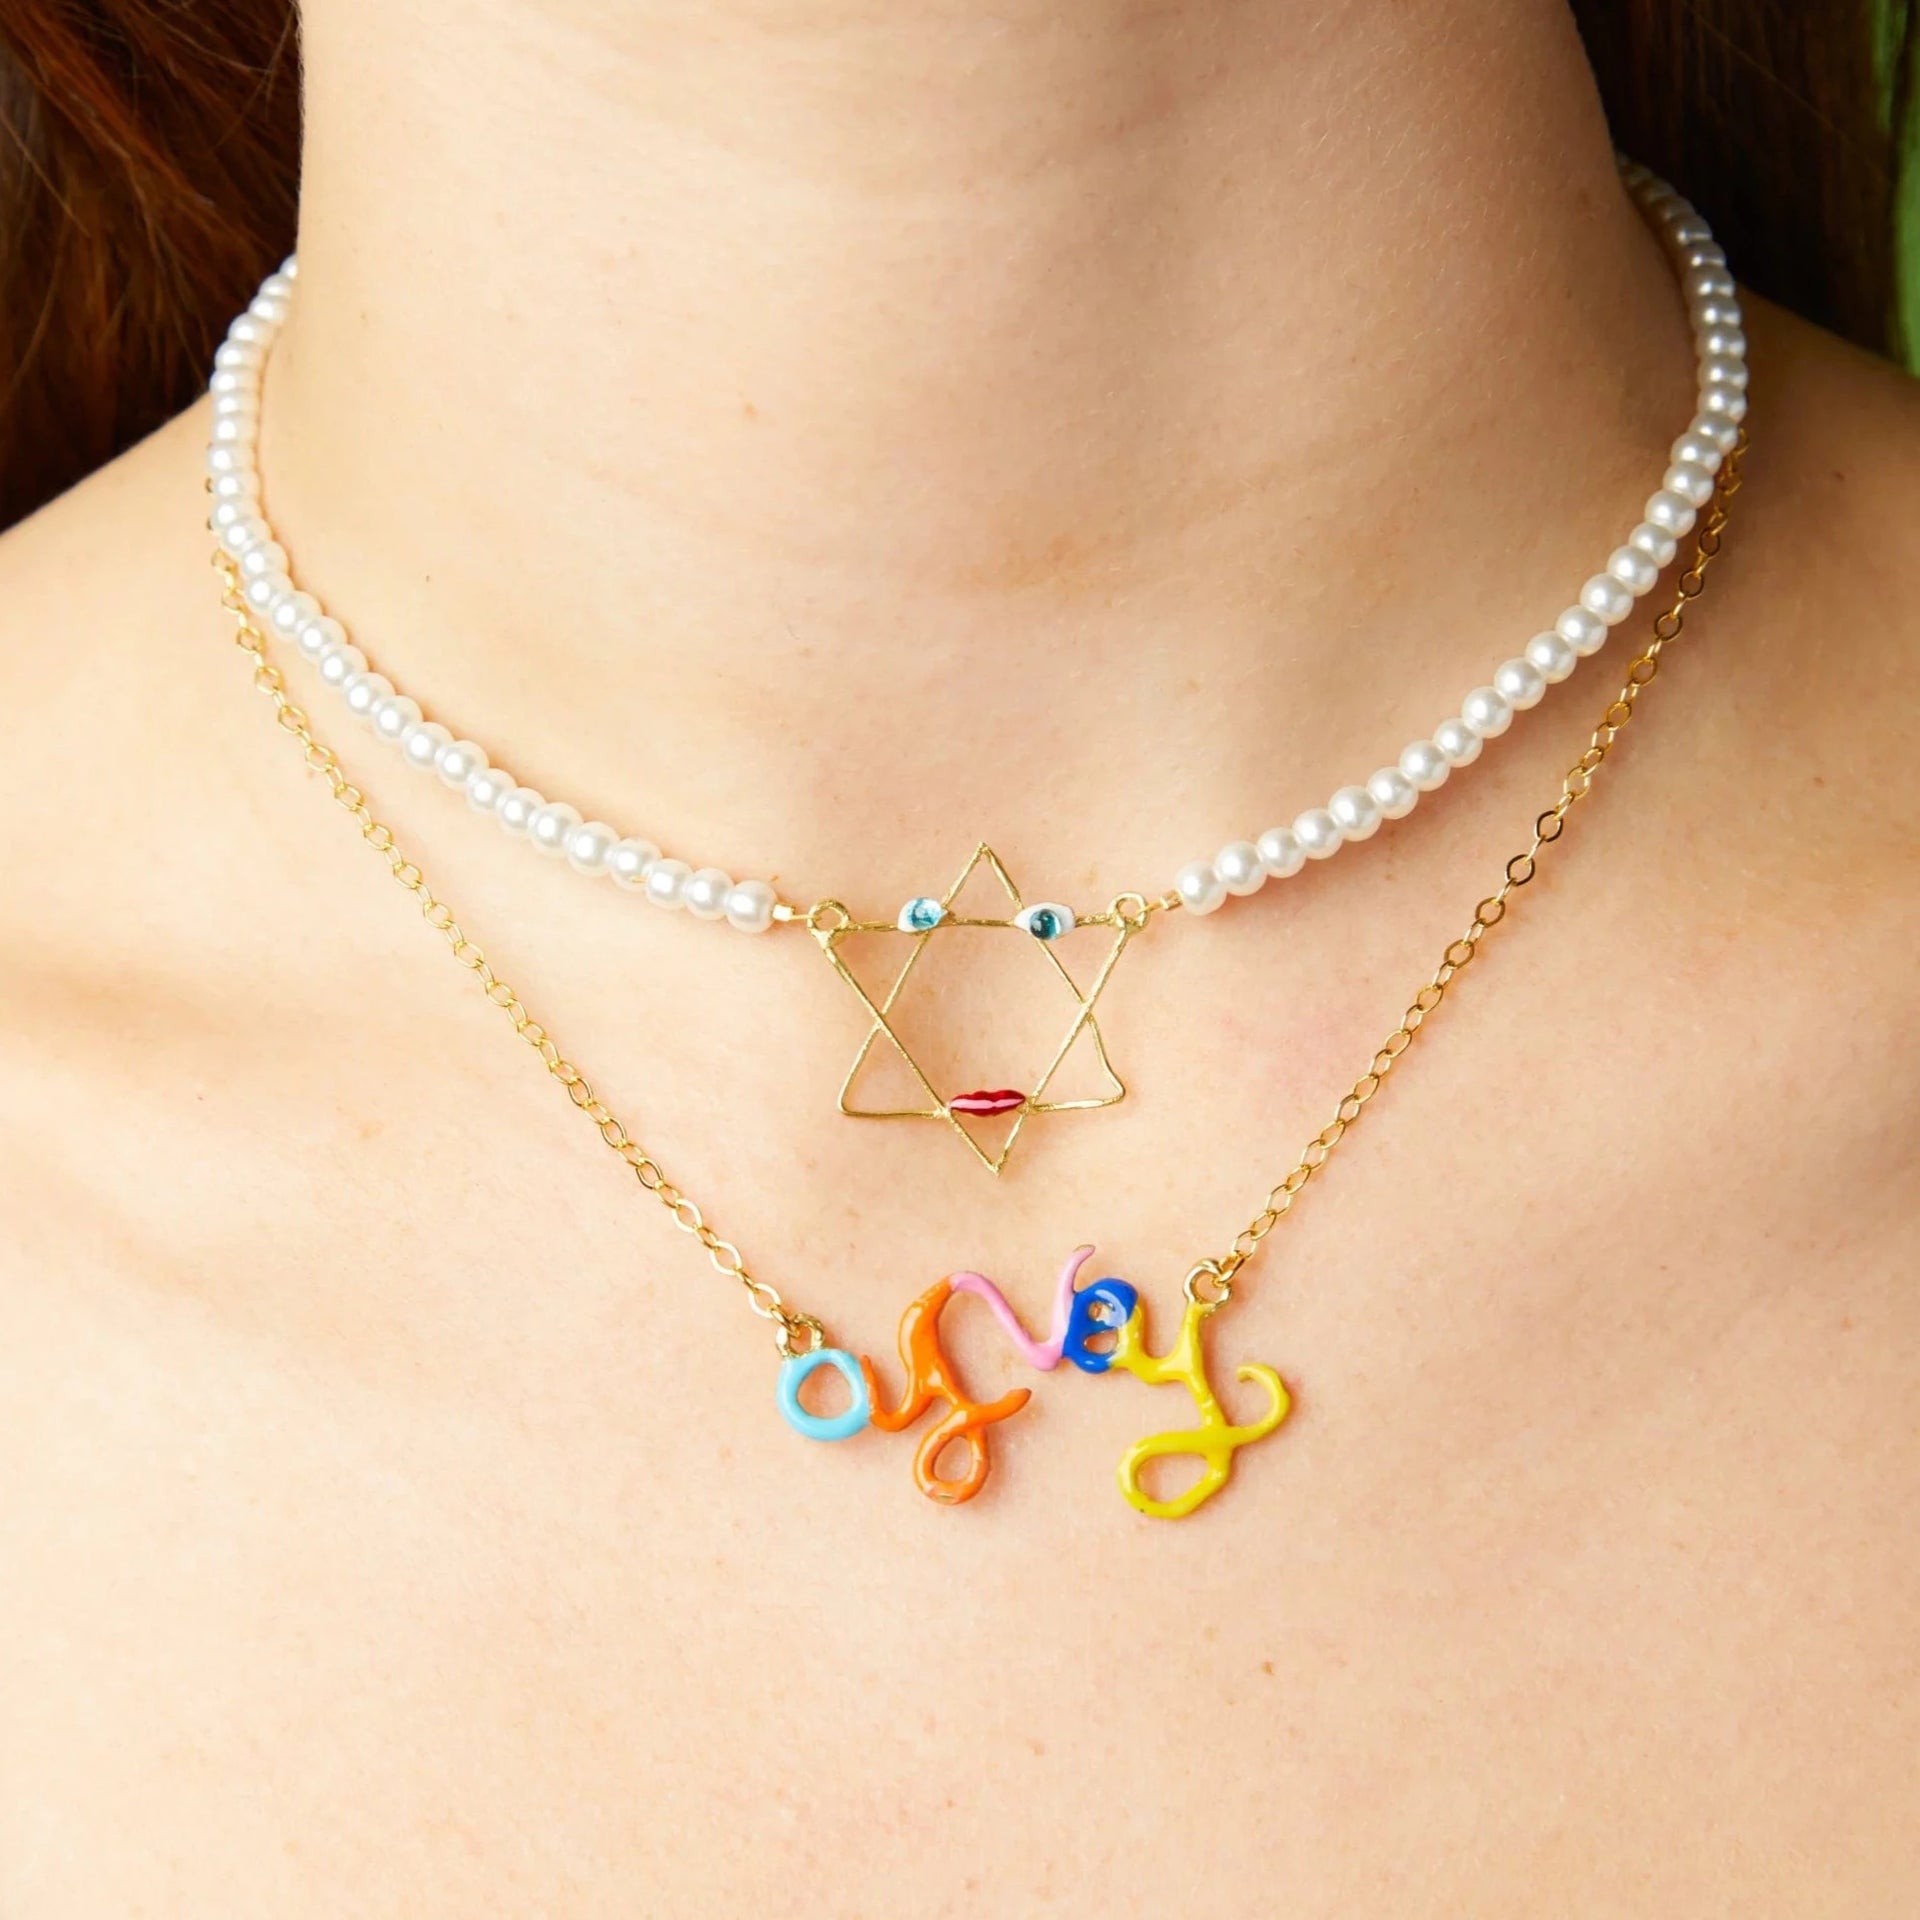 Susan Alexandra Necklaces Oy Vey Necklace - Multicolored, Bronze 18" Chain